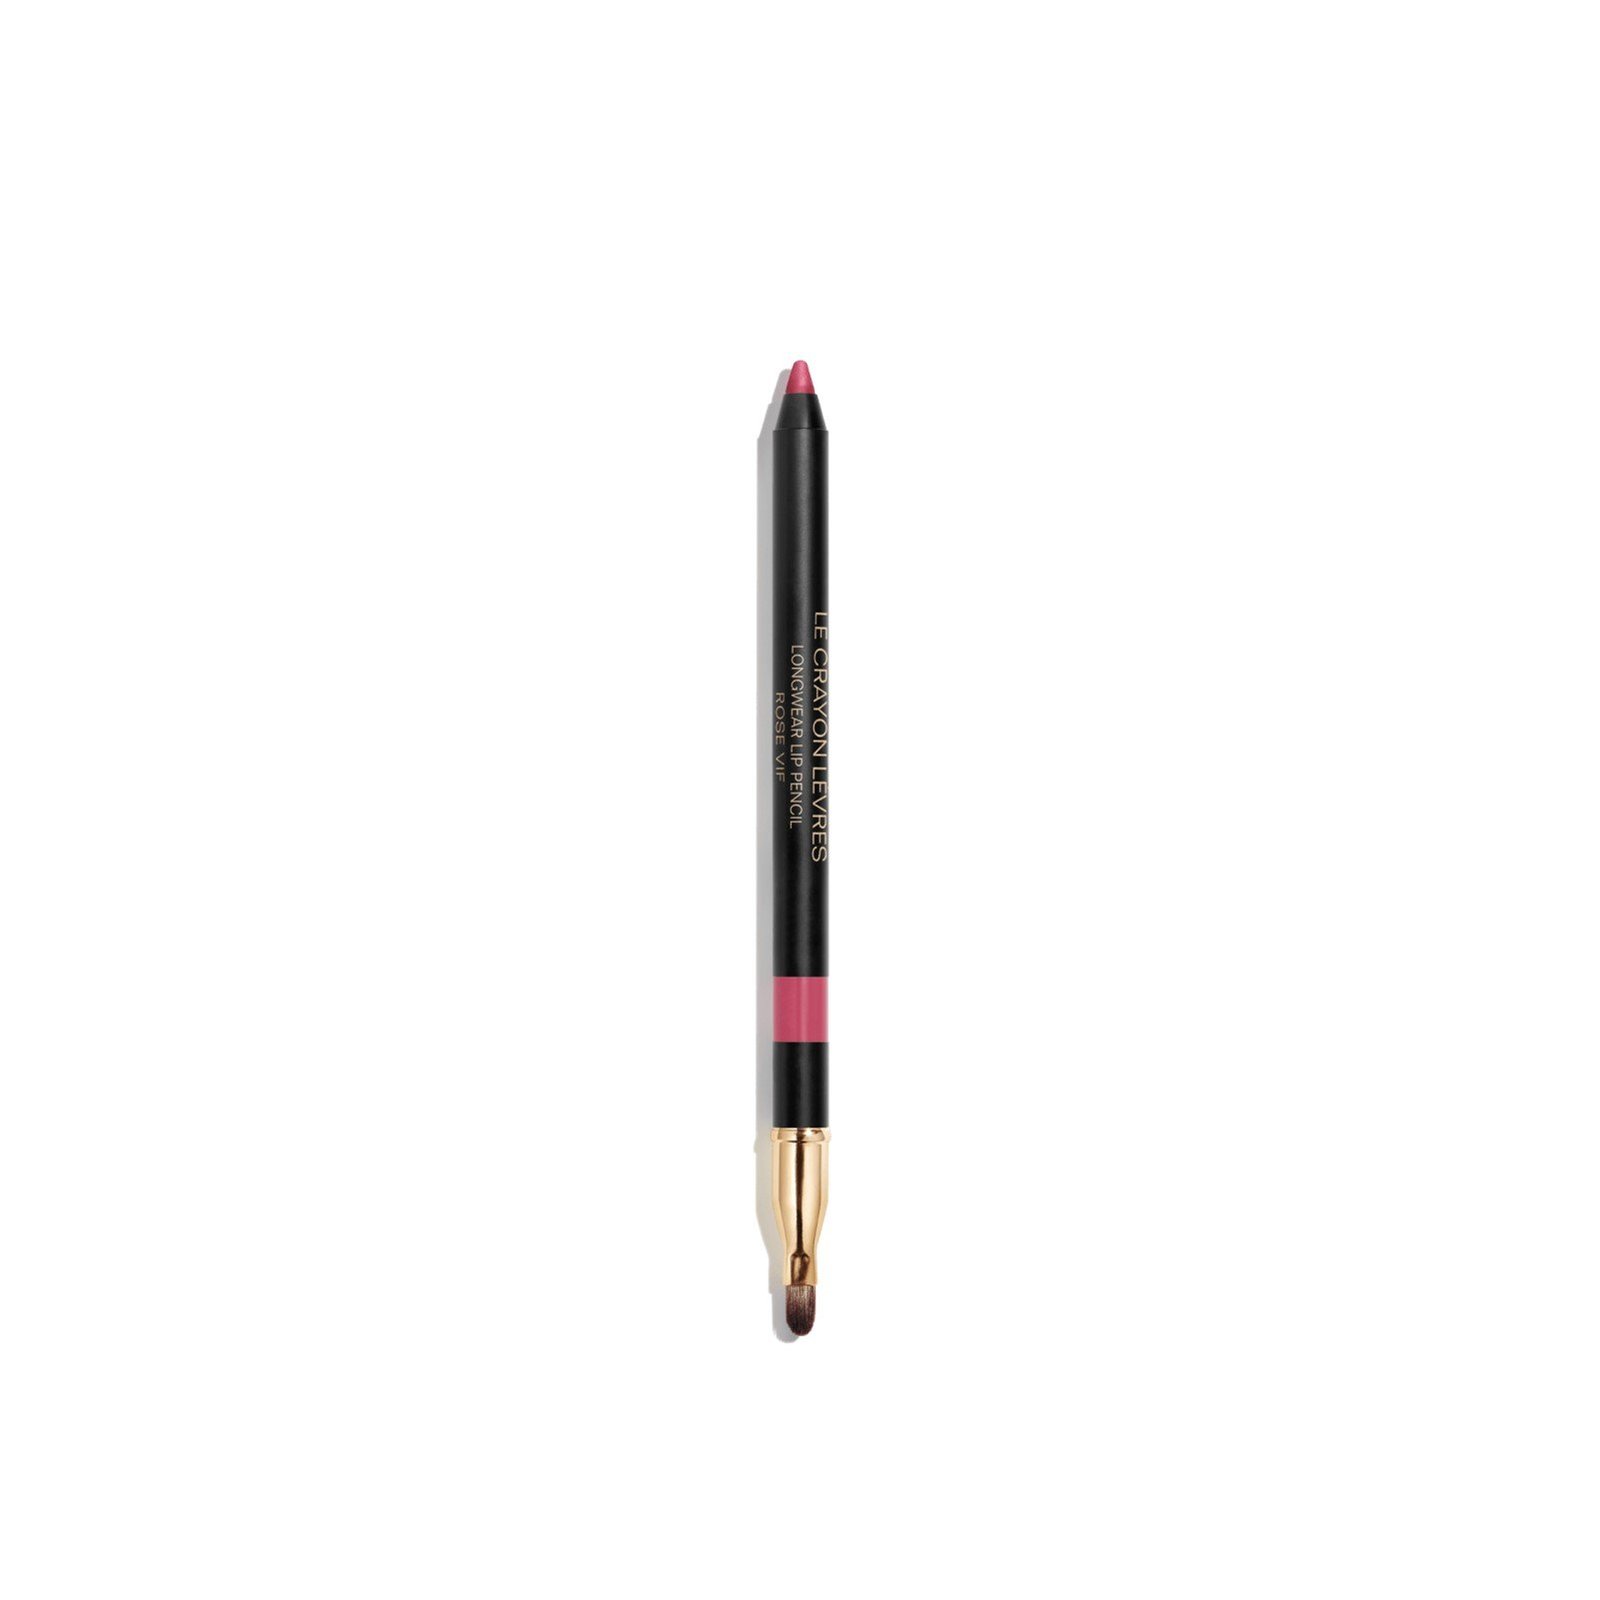 CHANEL Le Crayon Lèvres Longwear Lip Pencil 166 Rose Vif 1.2g (0.04 oz)